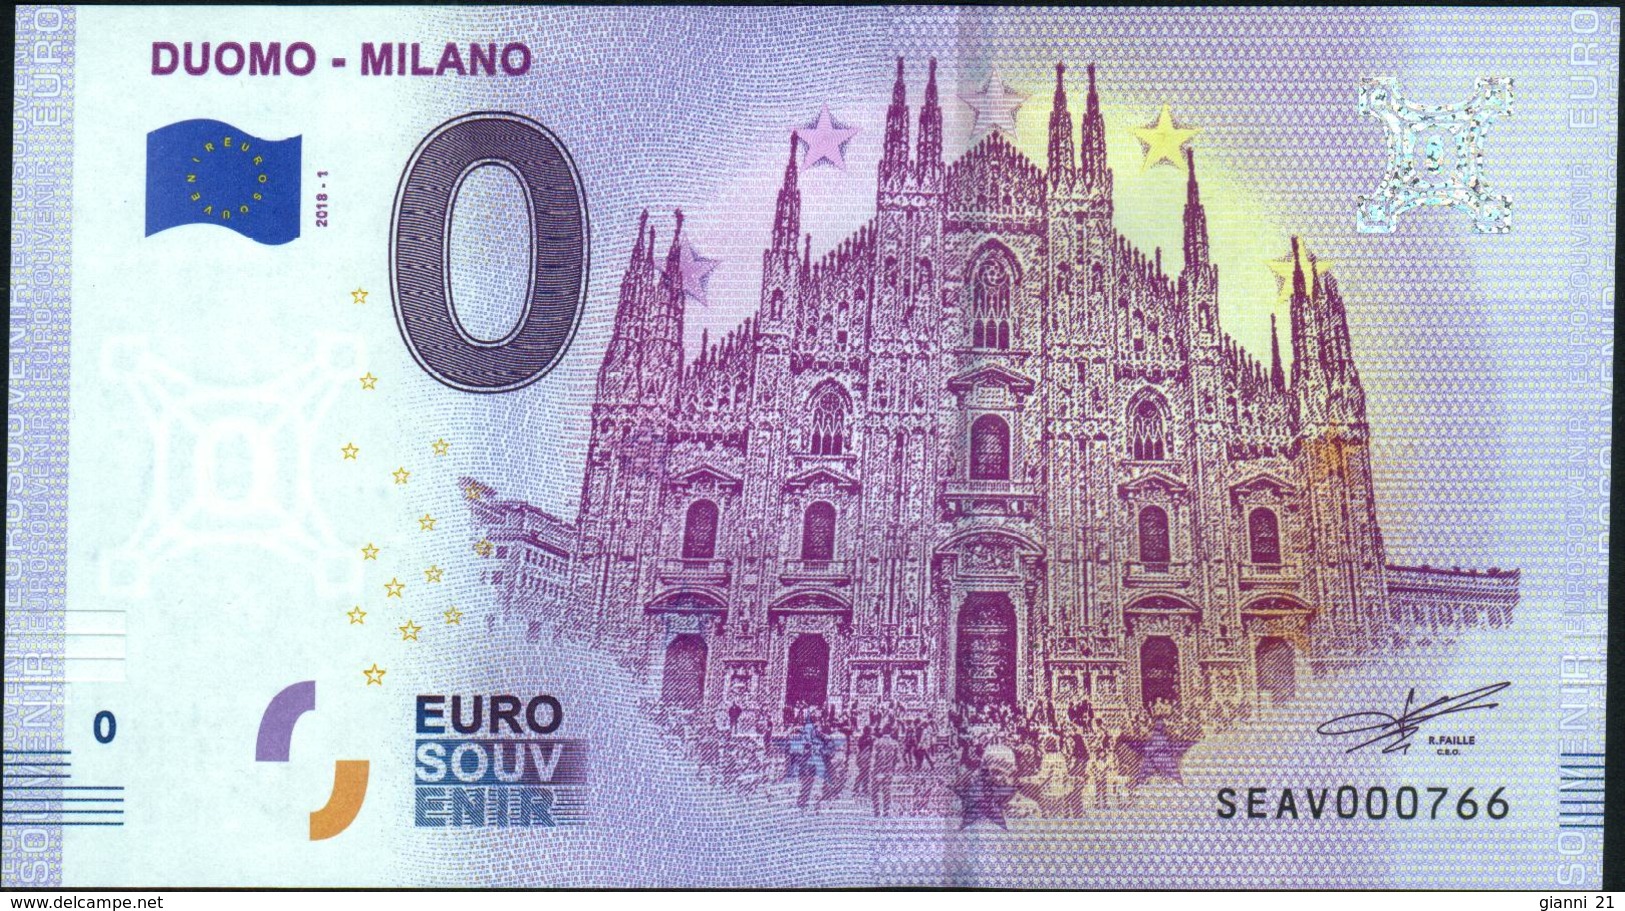 Zero - BILLET EURO O Souvenir - DUOMO - MILANO 2018-1set UNC {Italy} - Prove Private